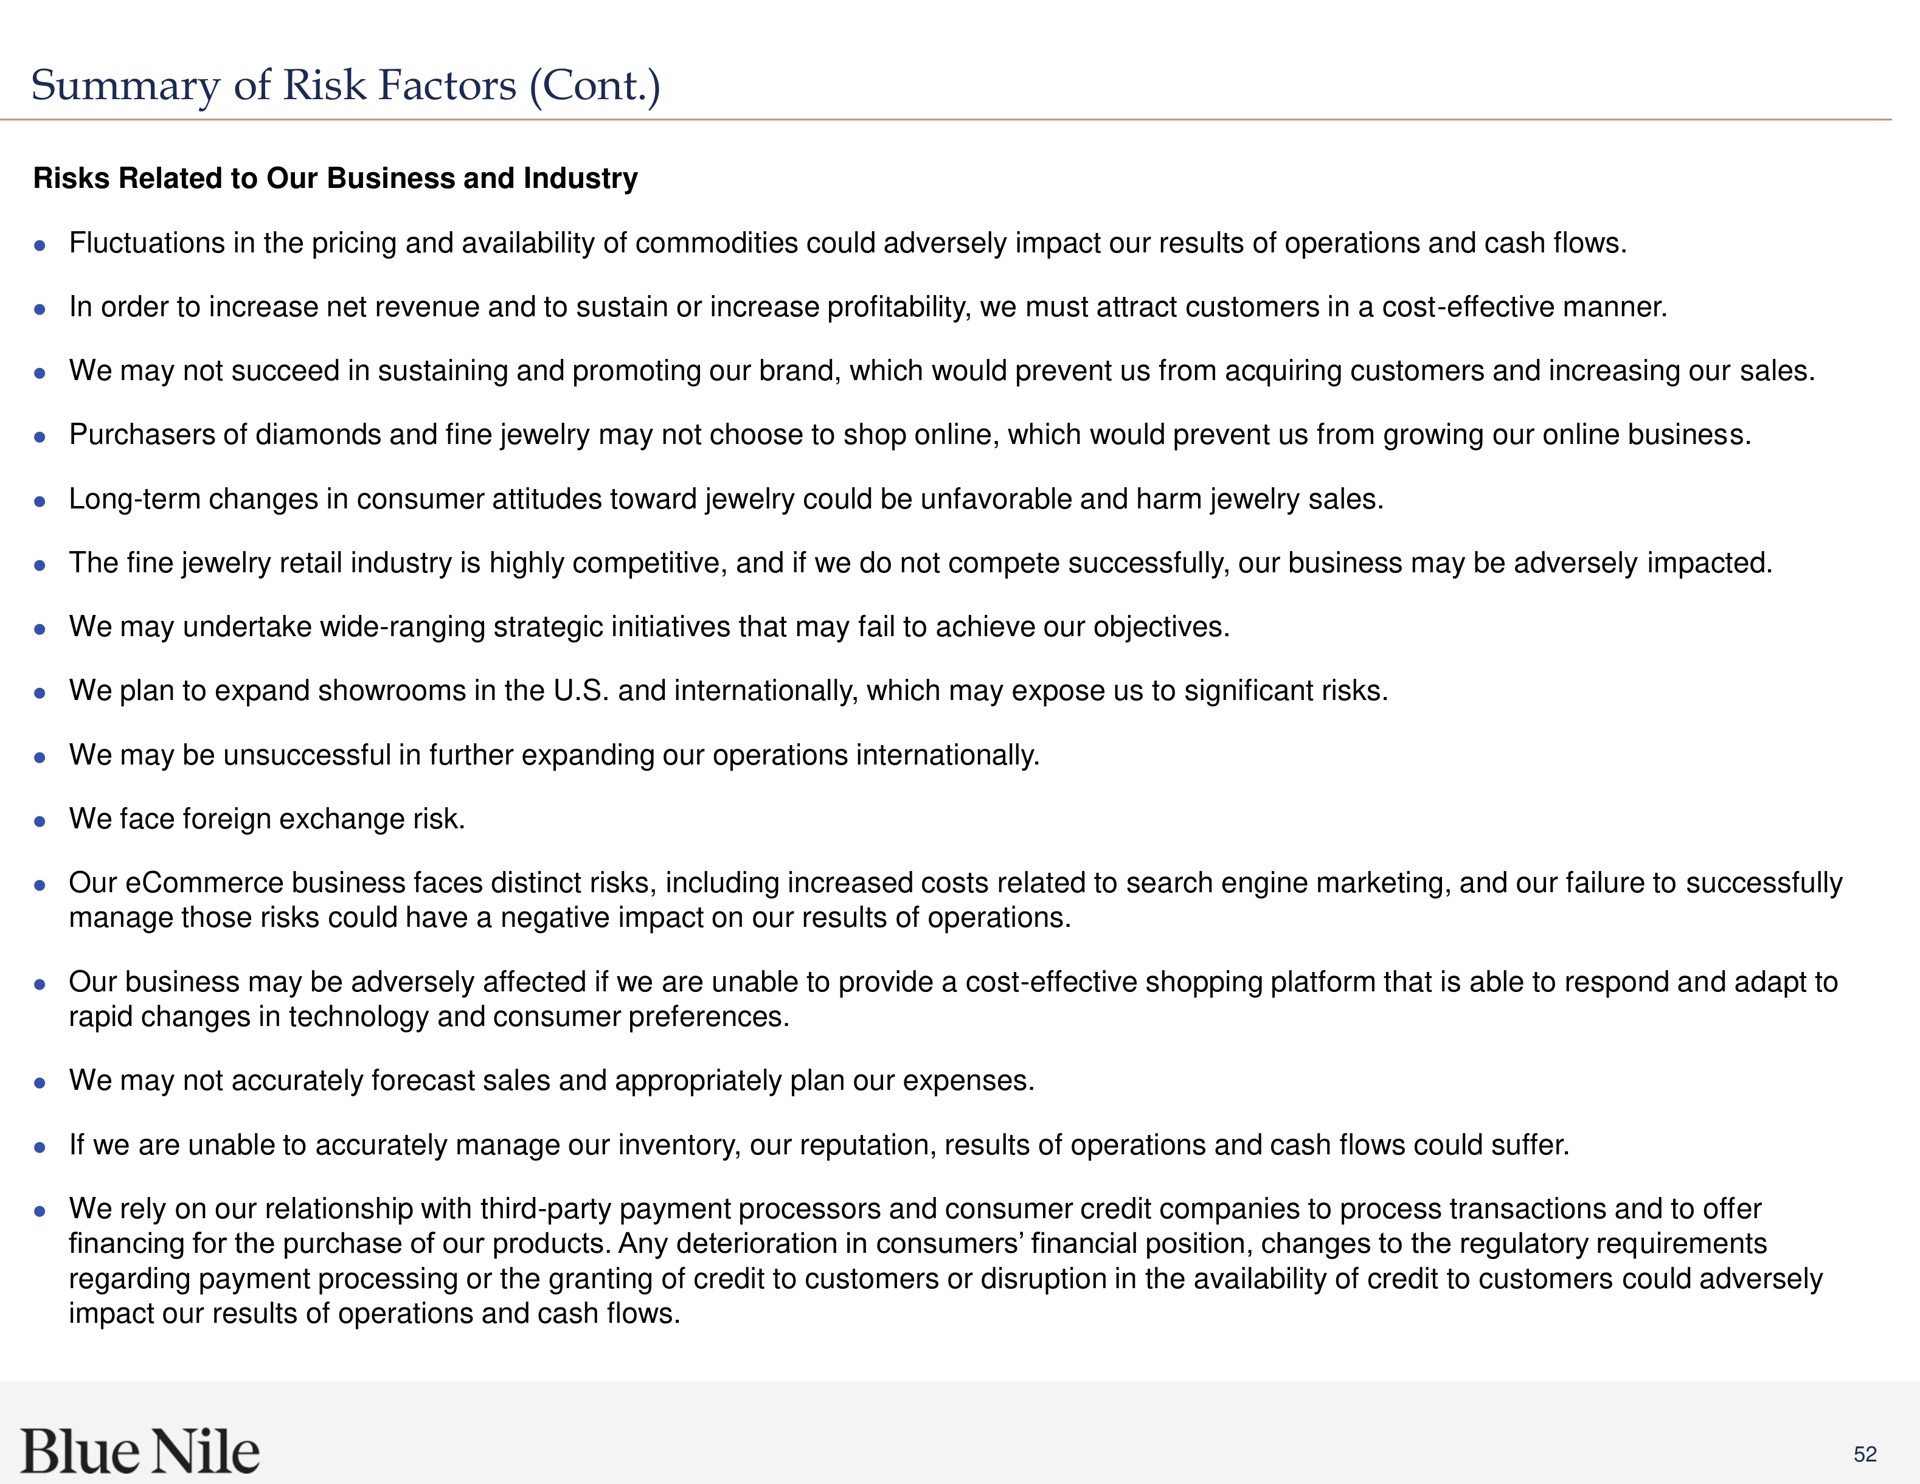 summary of risk factors blue | Blue Nile